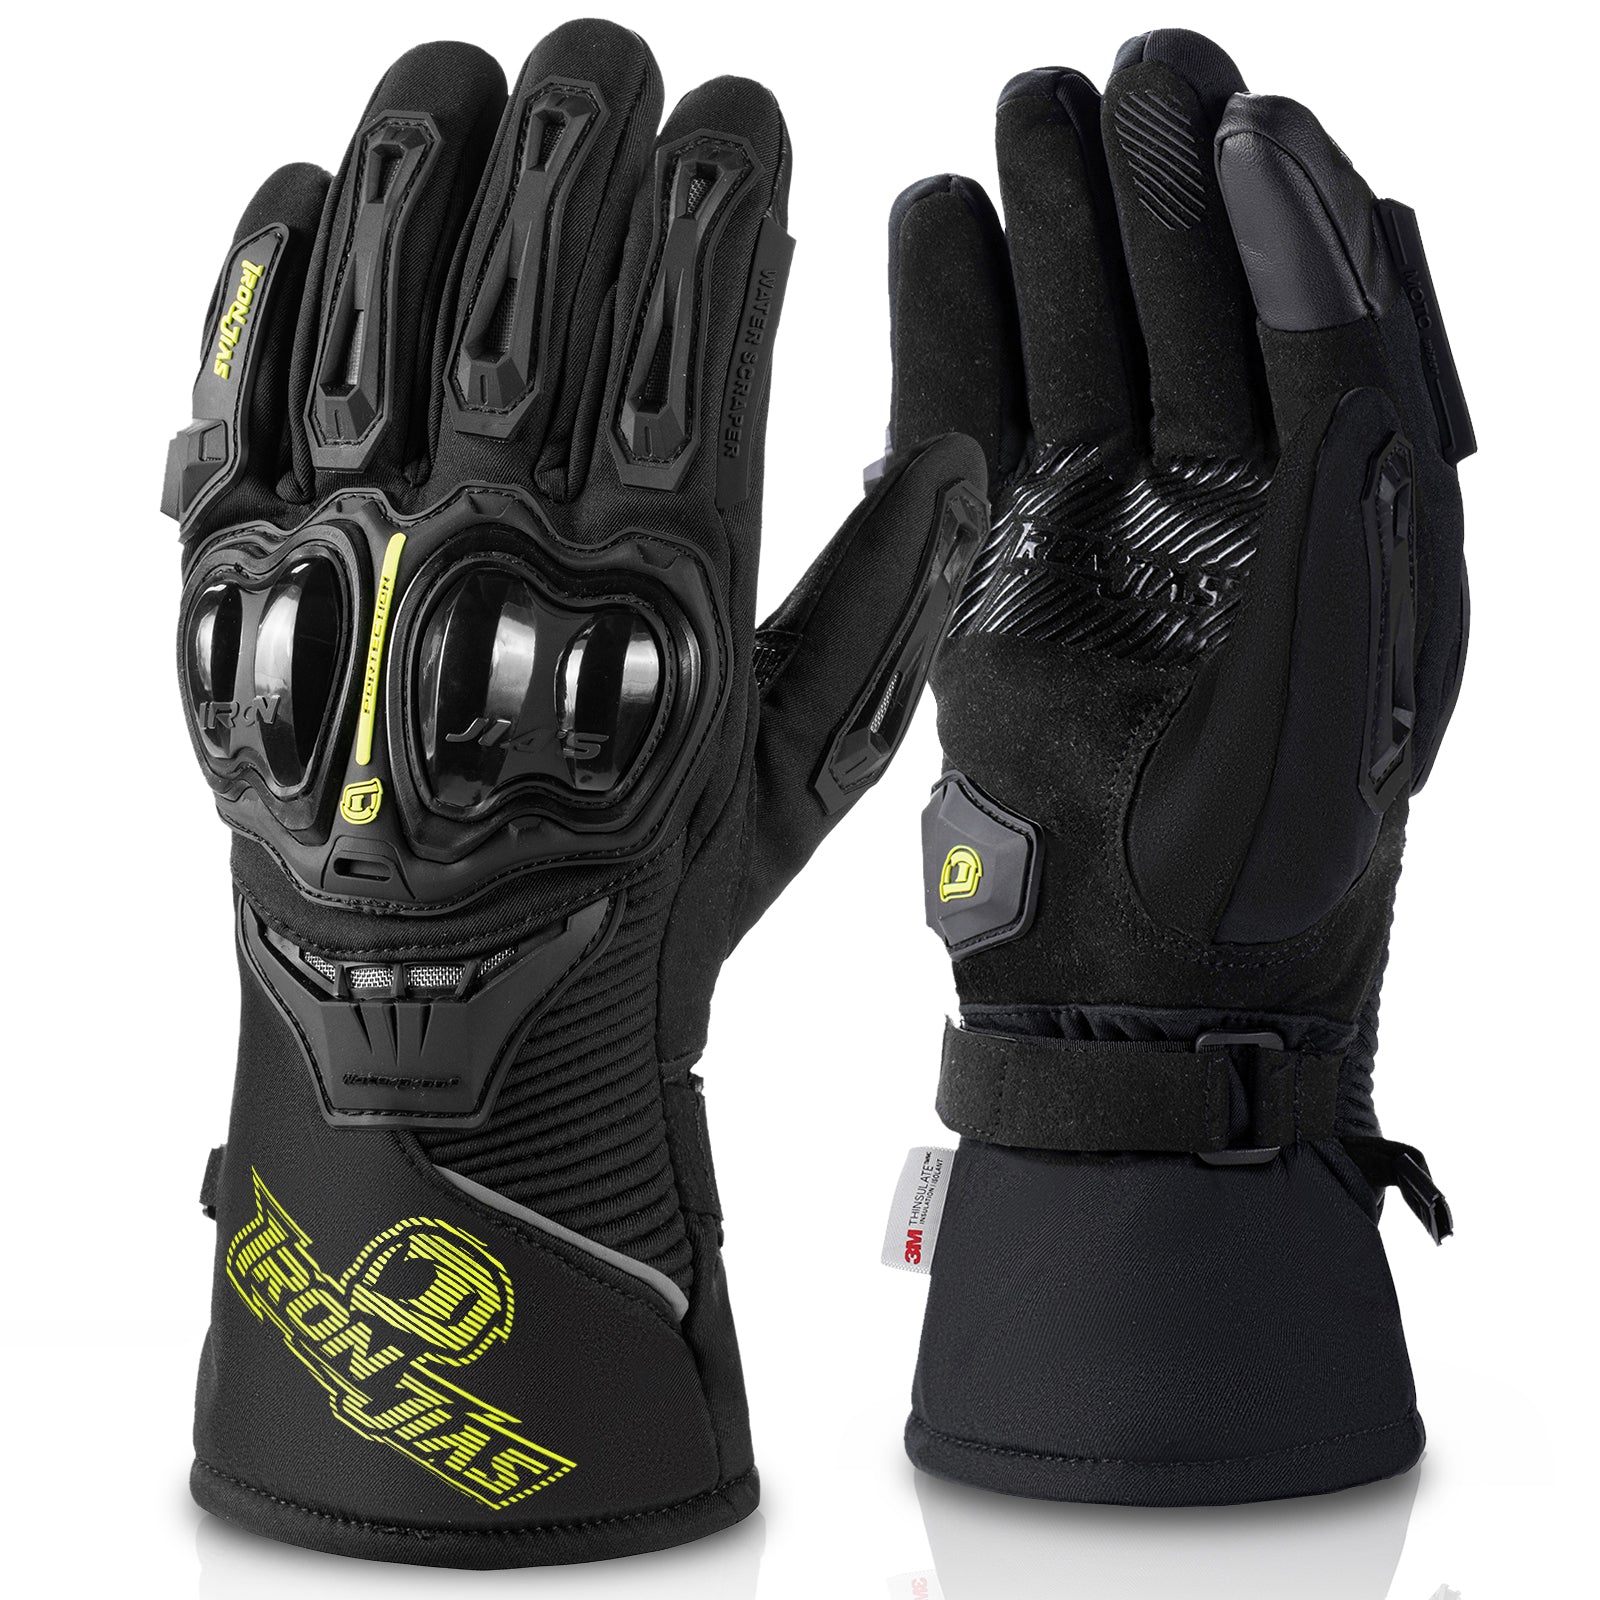  Waterproof Winter Ridngcycle Gloves